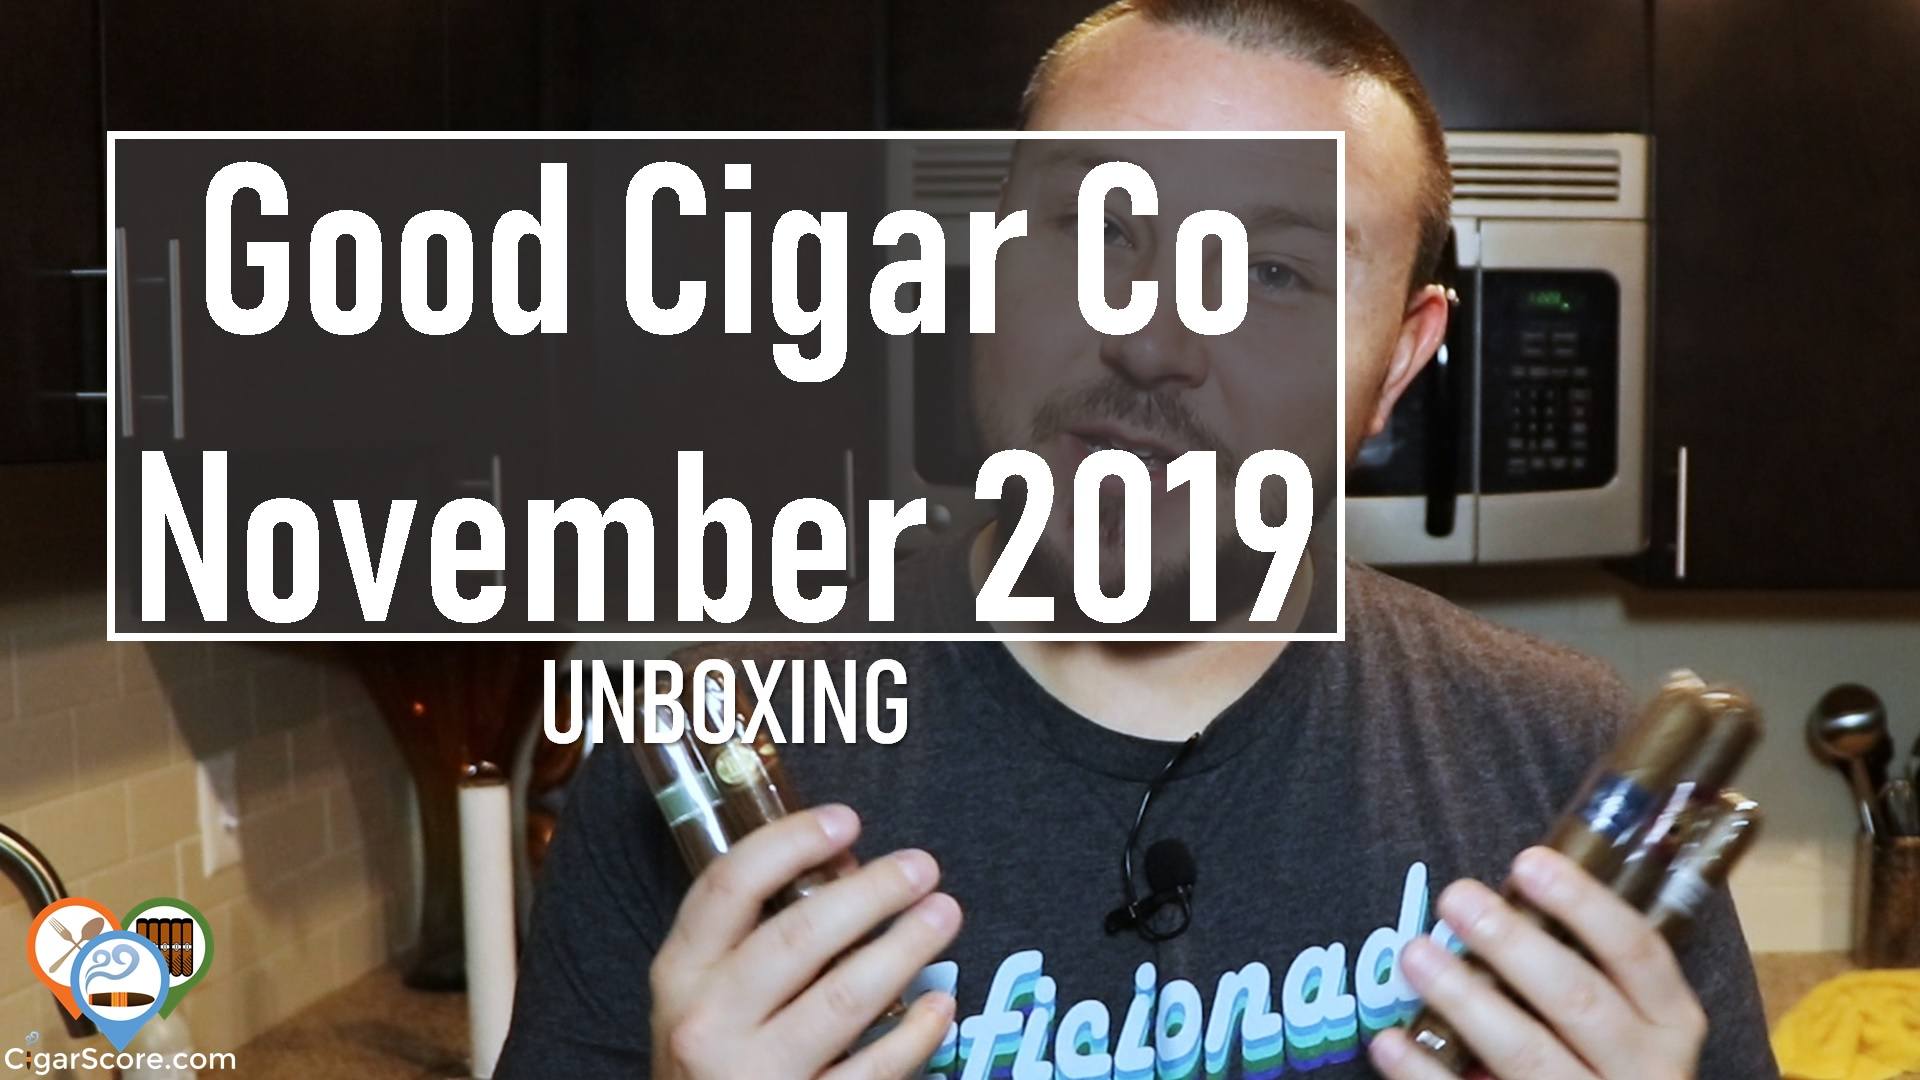 UNBOXING - Good Cigar Co NOVEMBER 2019